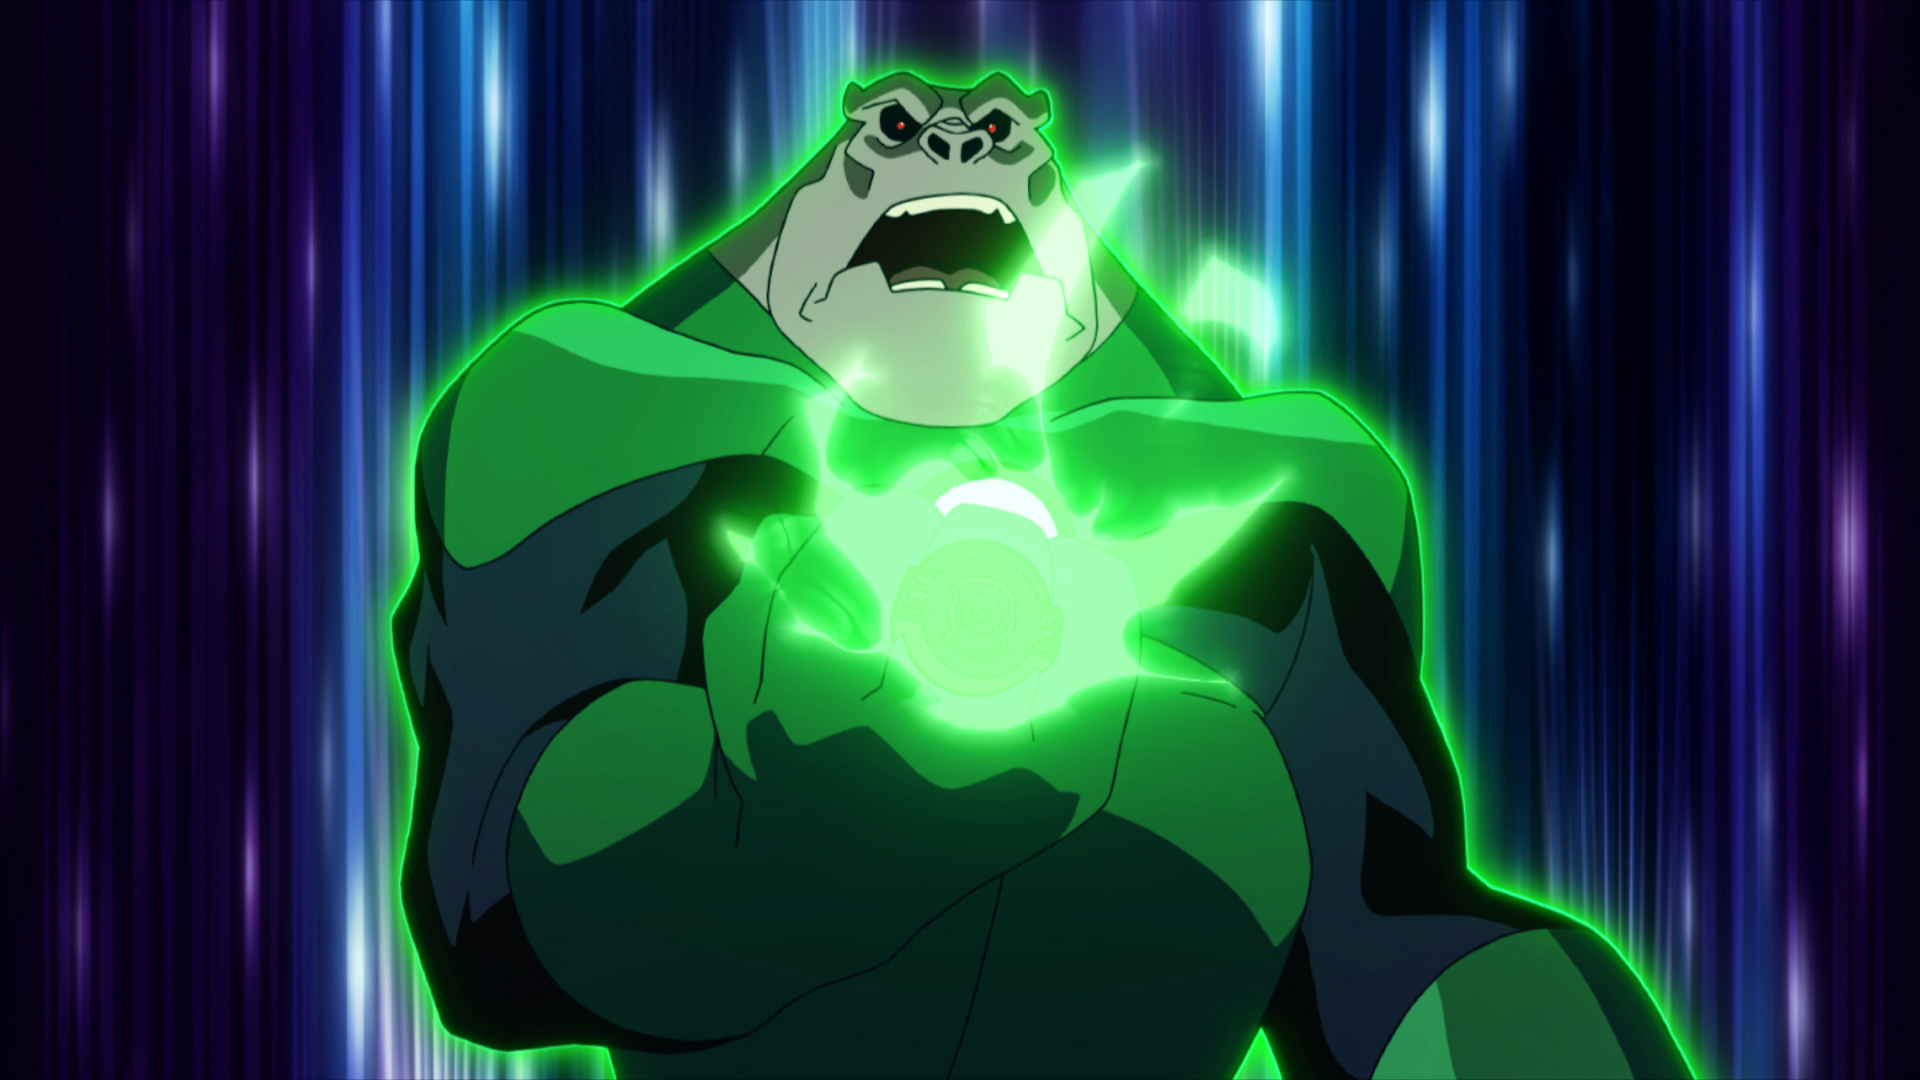 Green Lantern: Emerald Knights HD wallpapers, Desktop wallpaper - most viewed